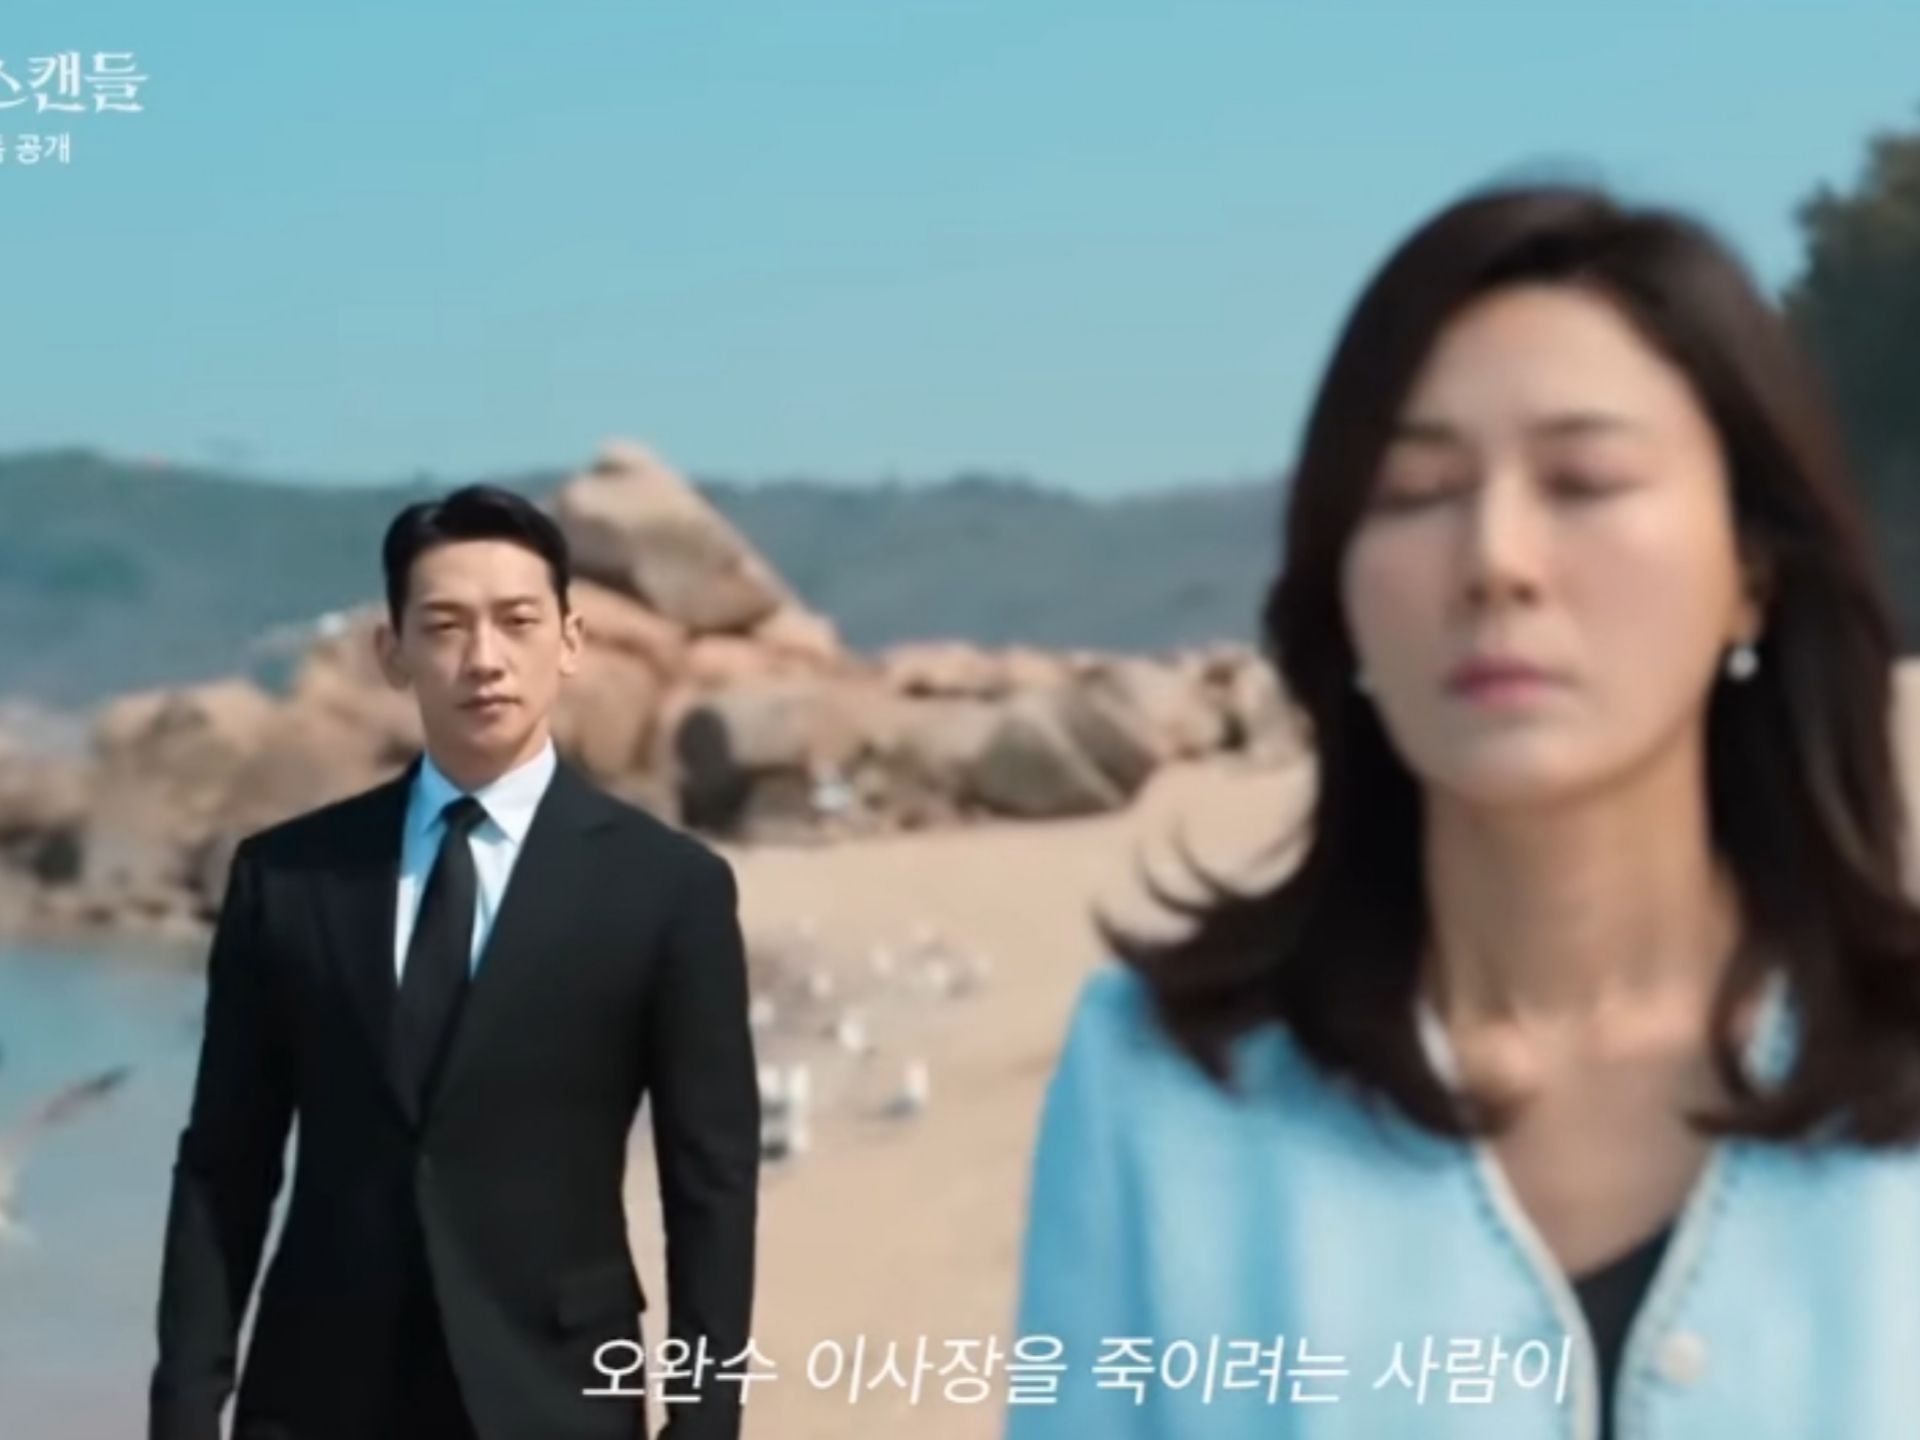 Rain dan Kim Ha Neul Merasakan penuh Emosi Usai Kecelakaan di Drama Baru "Red Swan"